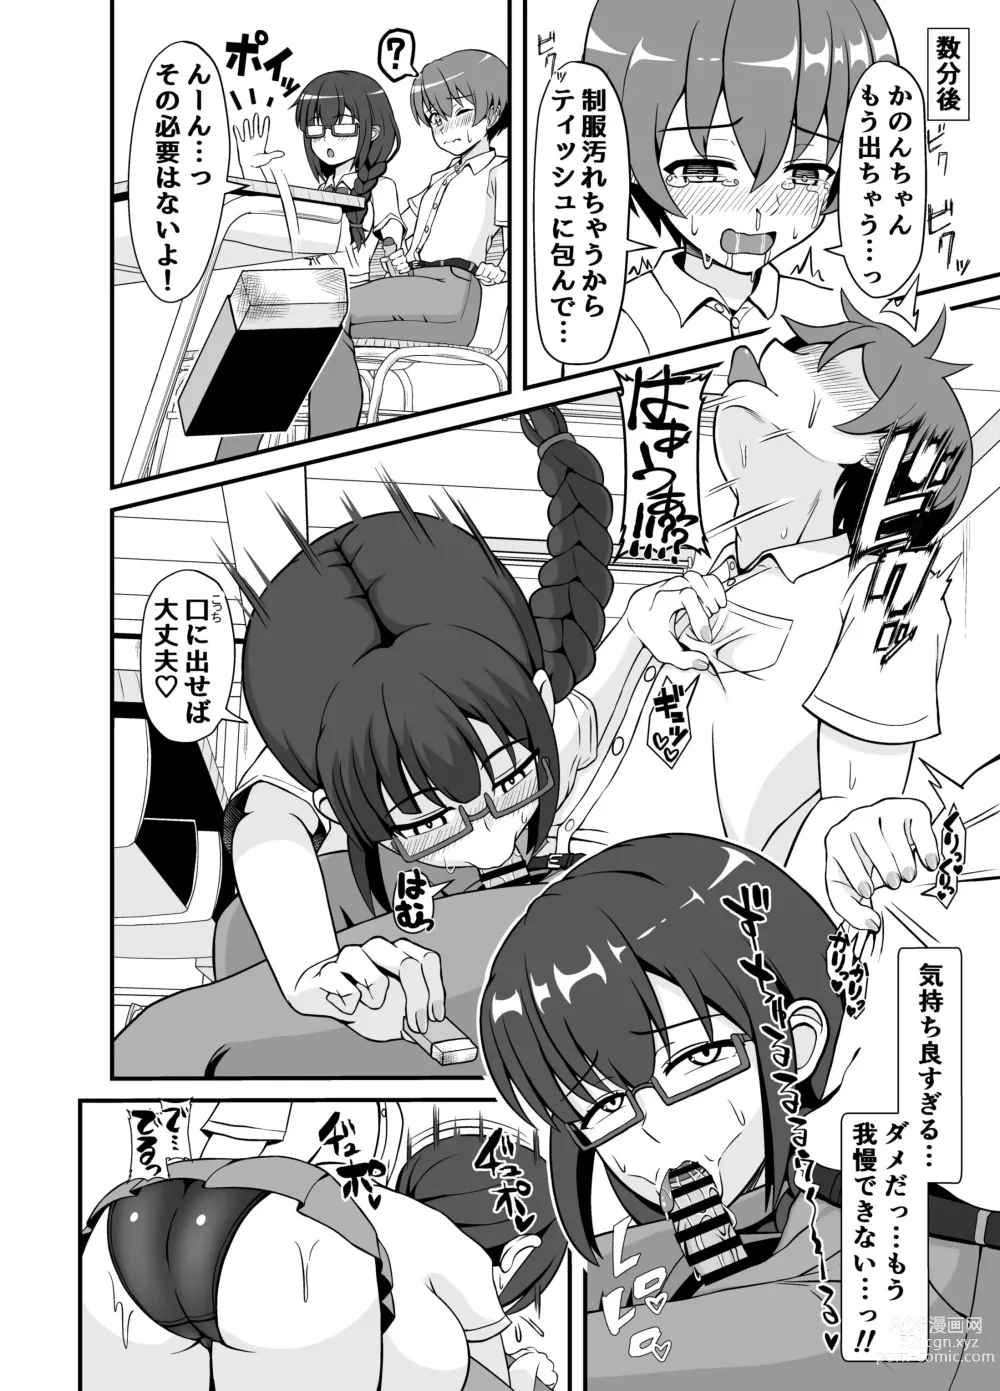 Page 17 of doujinshi 罰ゲームで告白した陰キャ彼女がドSだった件